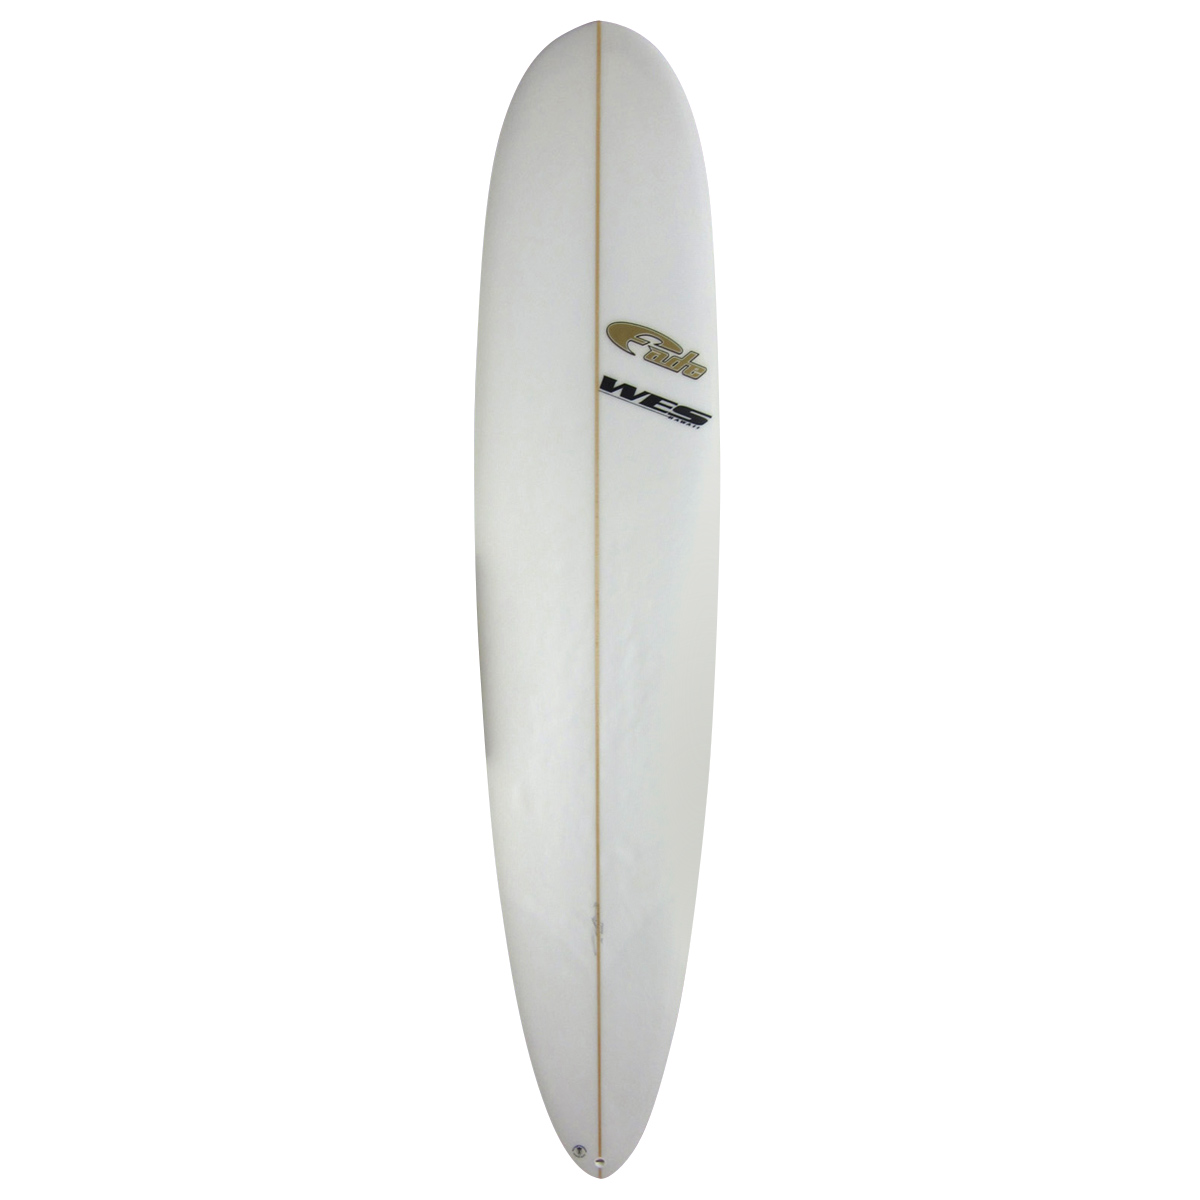 FADE surfboard サーフボード